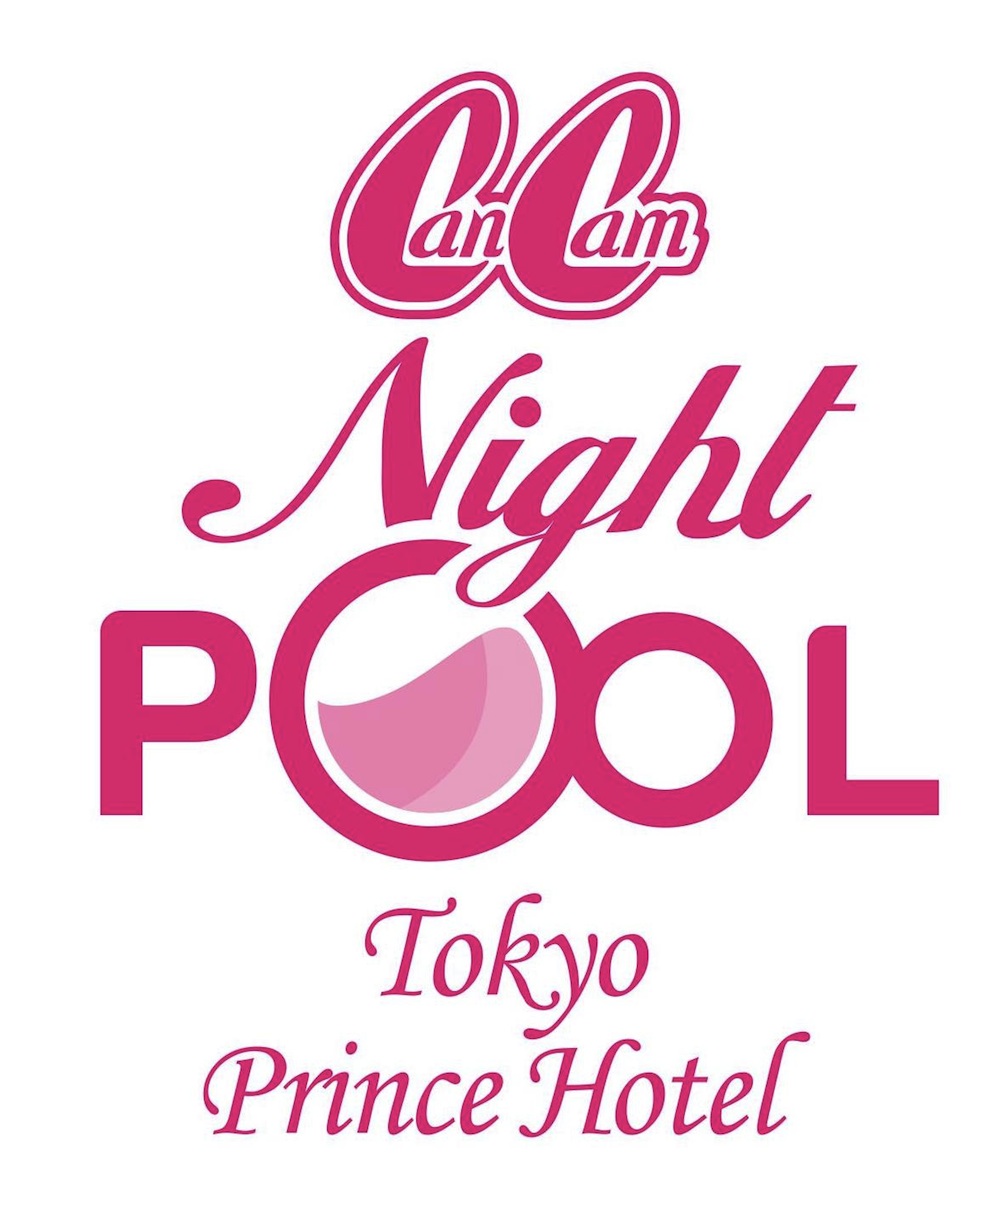 CanCam×Tokyo Prince Hotel Night Pool logo